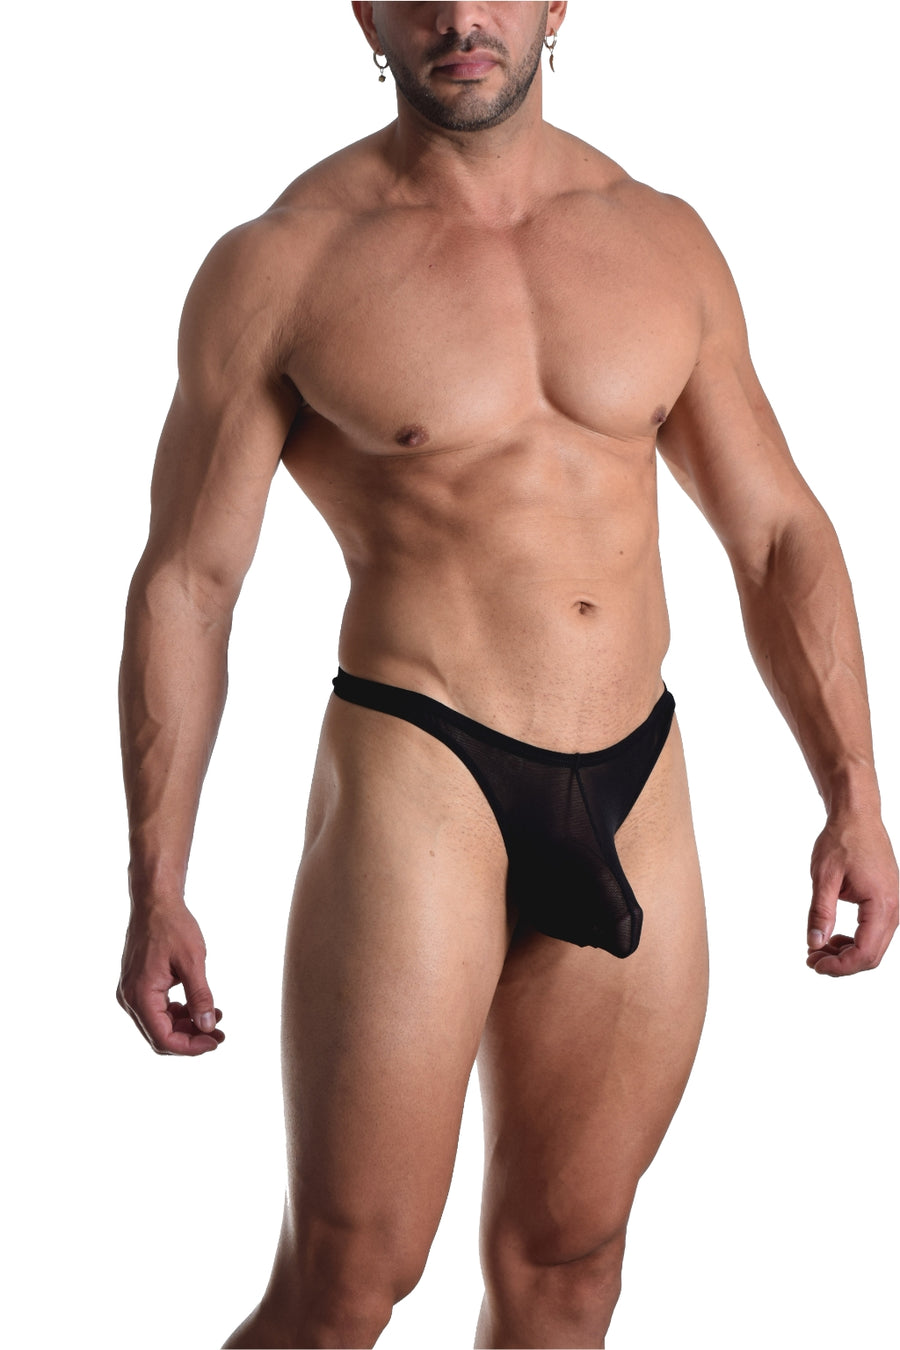 BfM Mens Sheer Net Thong Pouch Underwear – Bodywear for Men